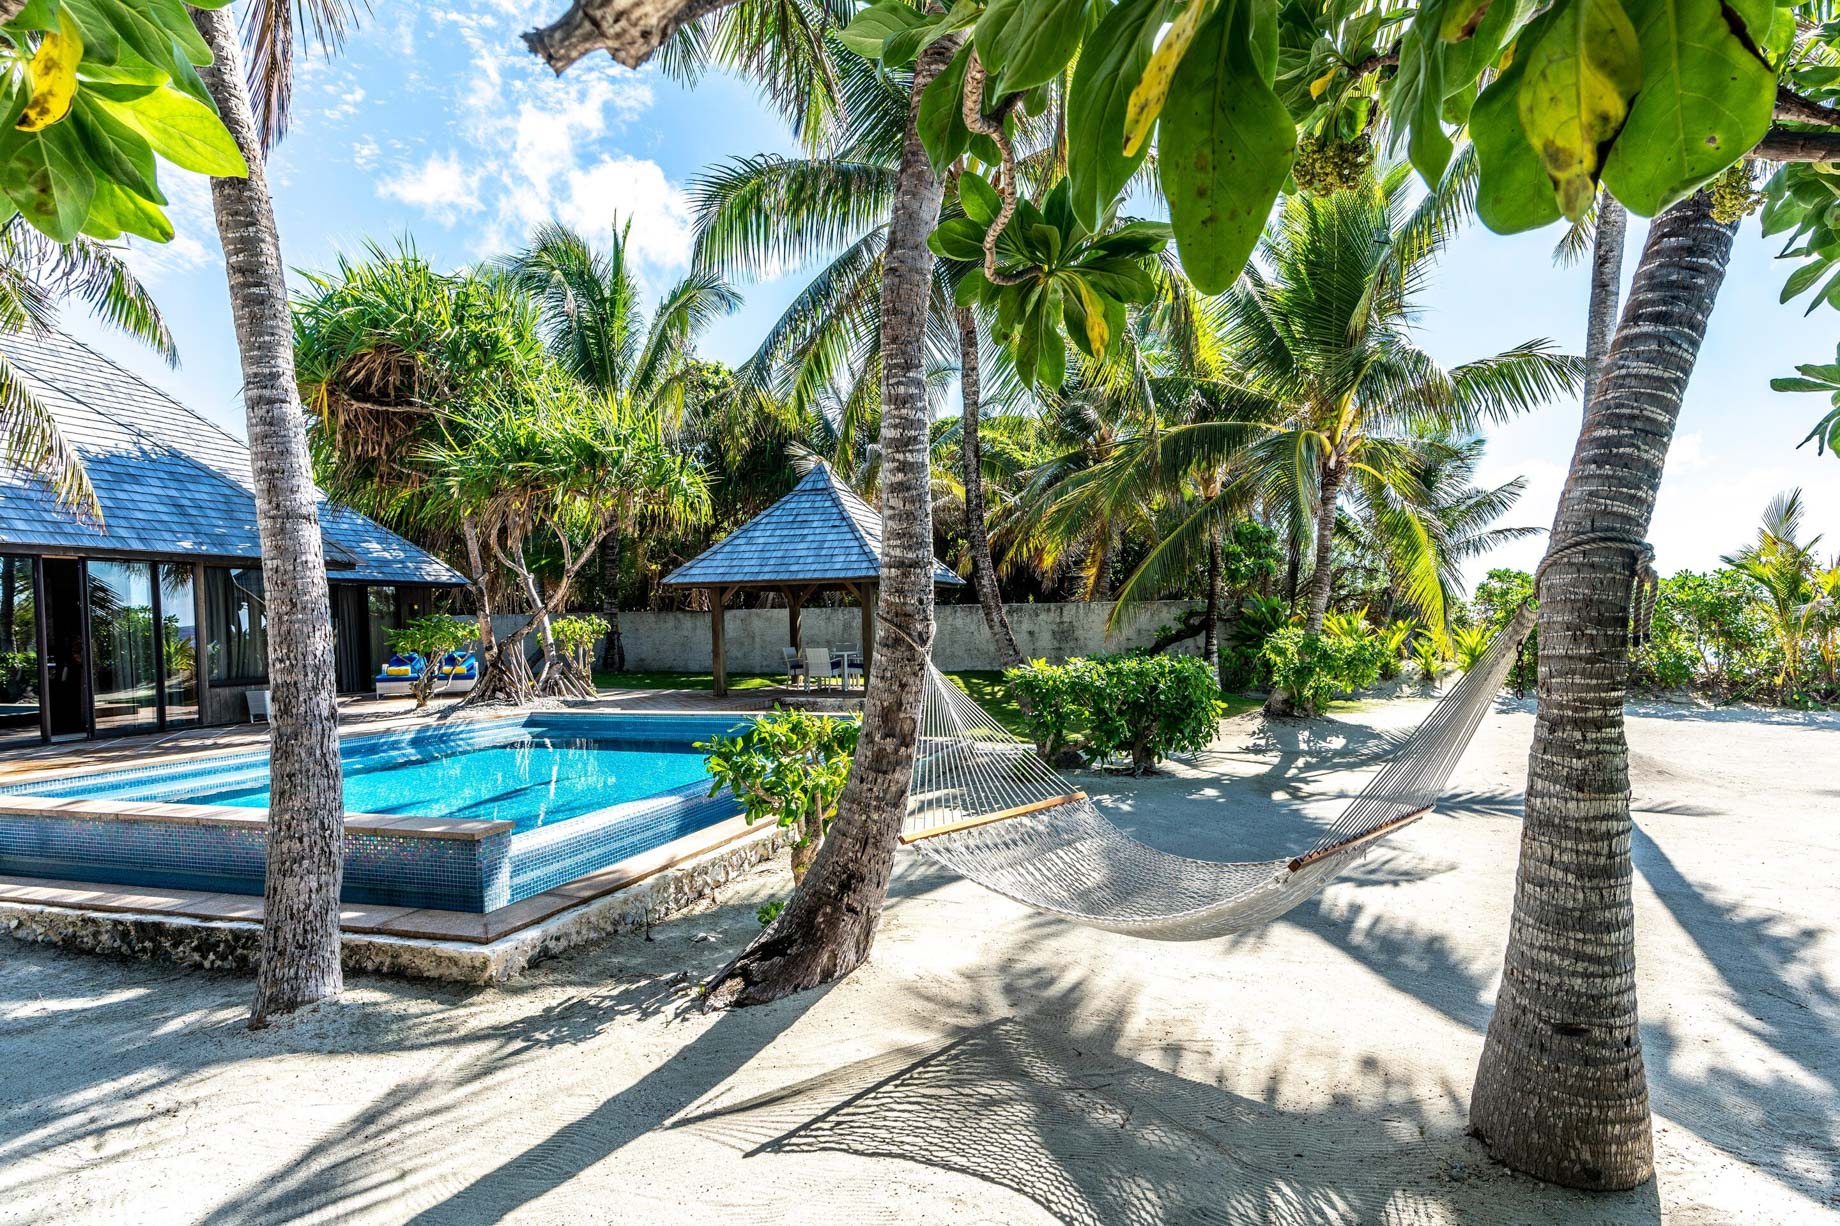 The St. Regis Bora Bora Resort - Bora Bora, French Polynesia - Two Bedrooms Garden Suite Villa Pool